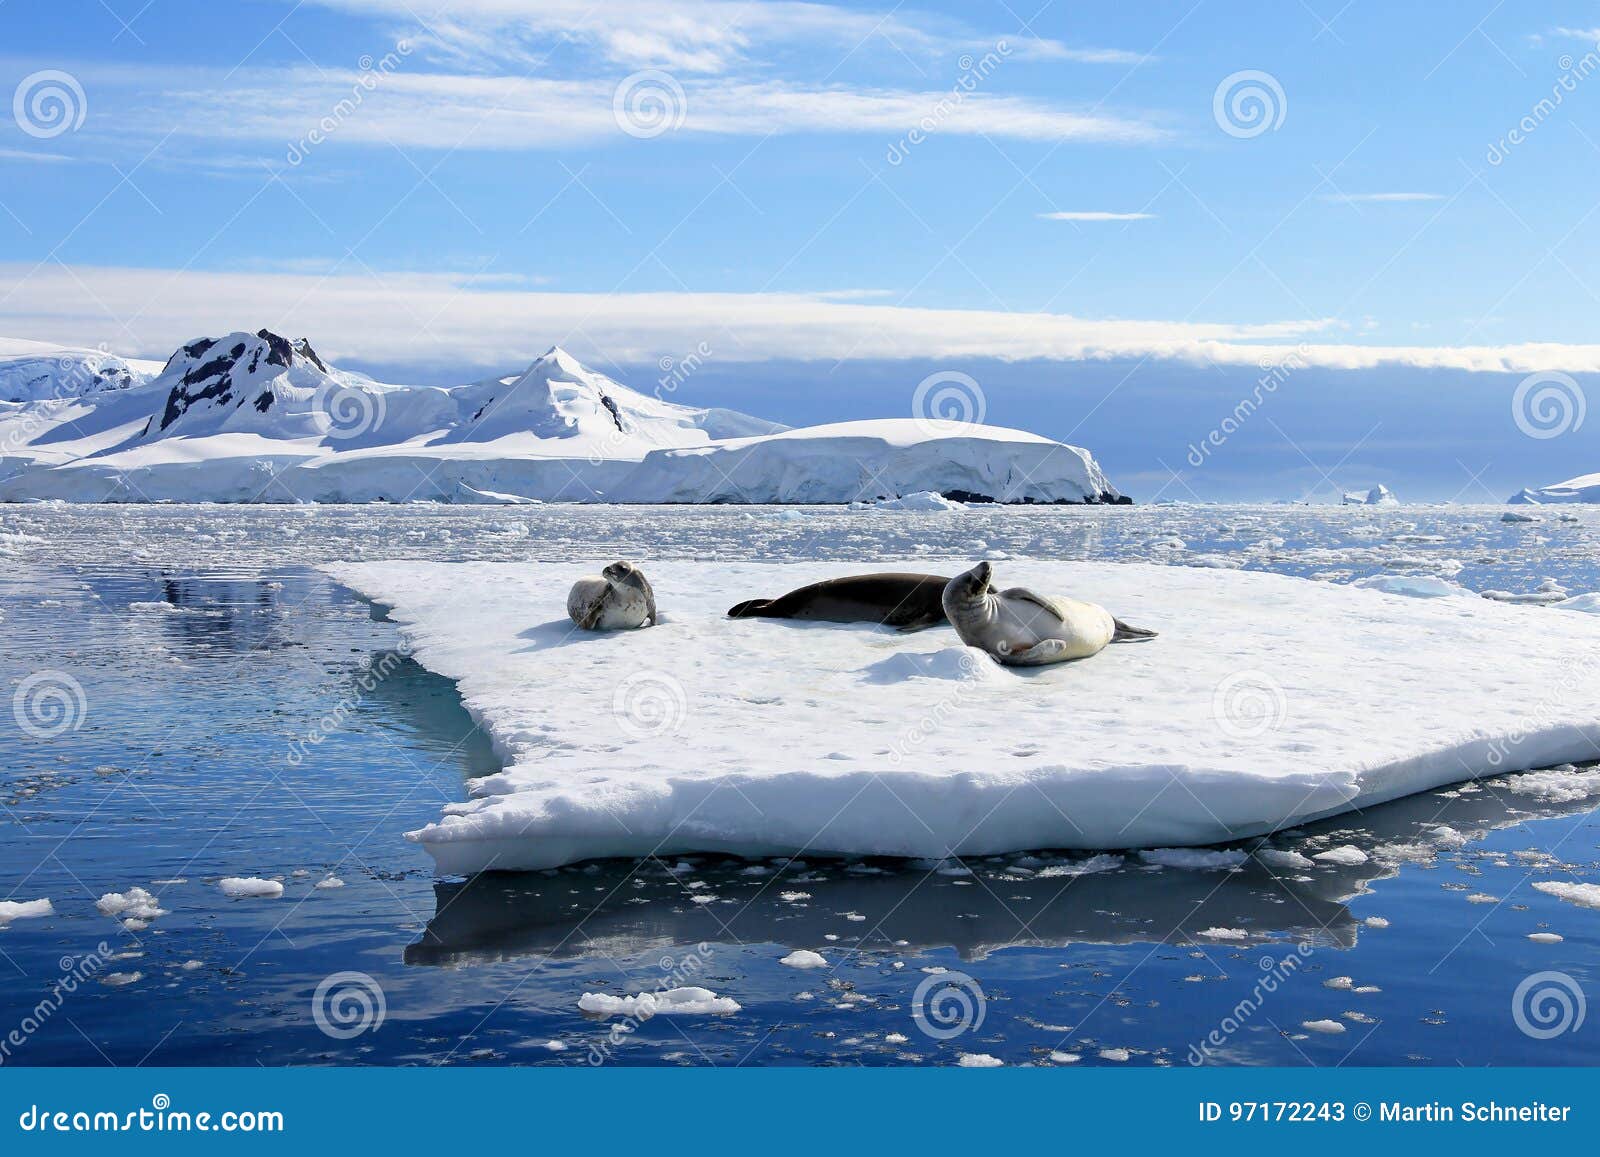 crabeater seals on ice floe, antarctic peninsula